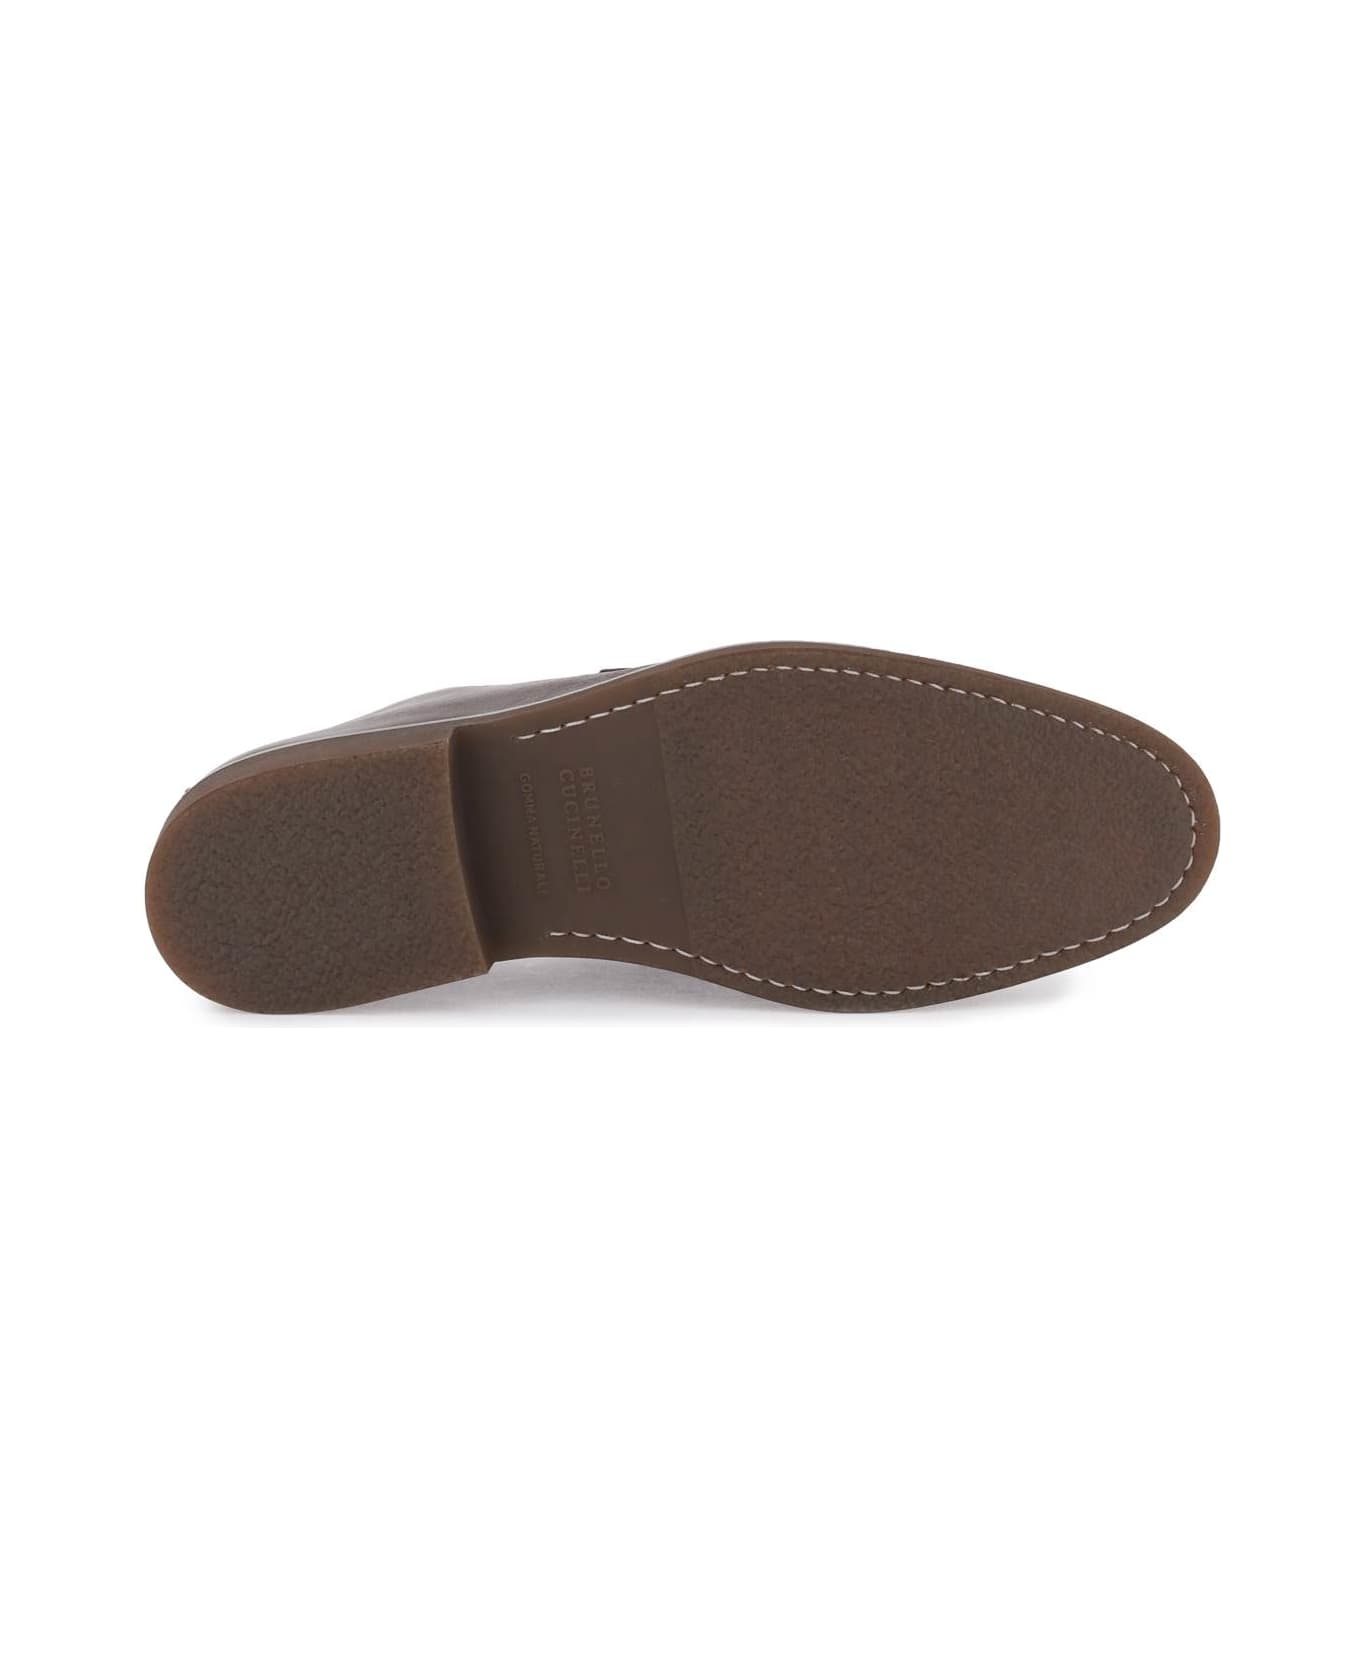 Brunello Cucinelli Leather Penny Loafers - ESPRESSO (Brown)